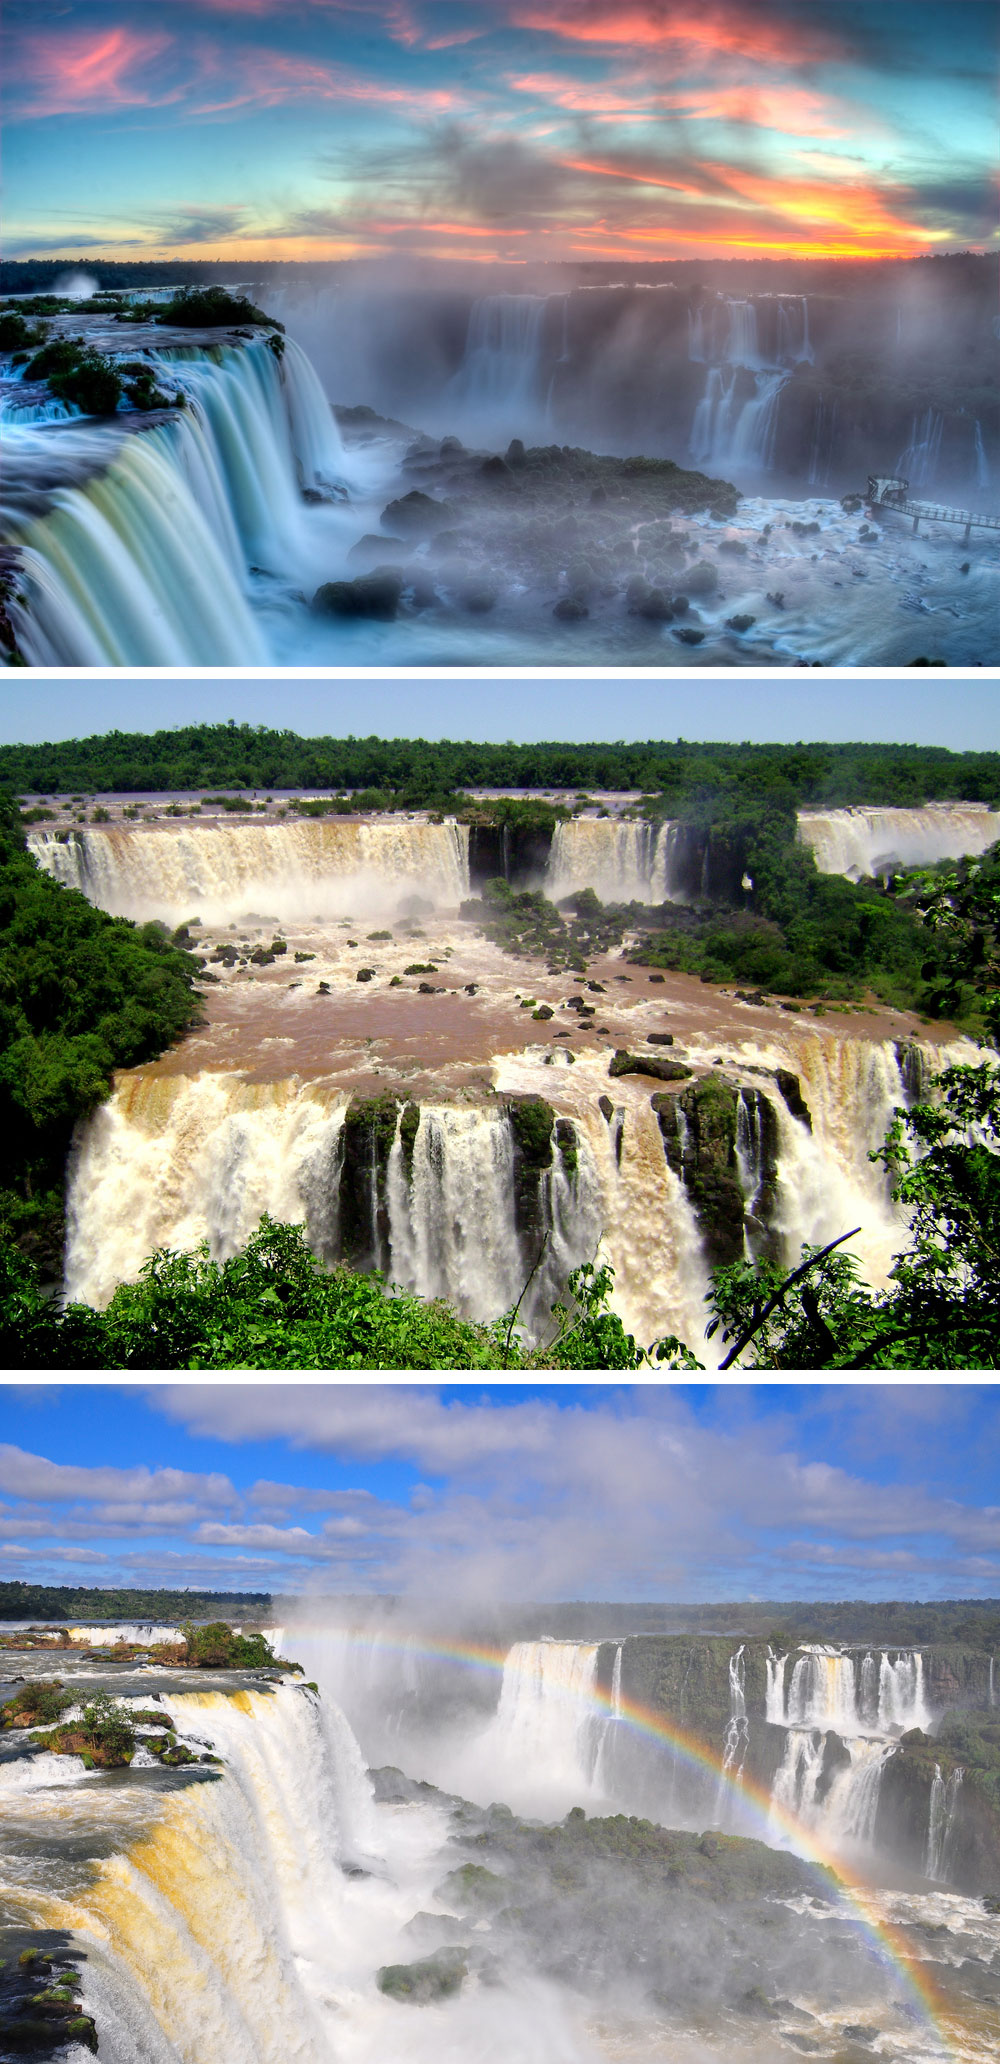 Fakta: Iguazú-vandfaldene ligger i Argentina